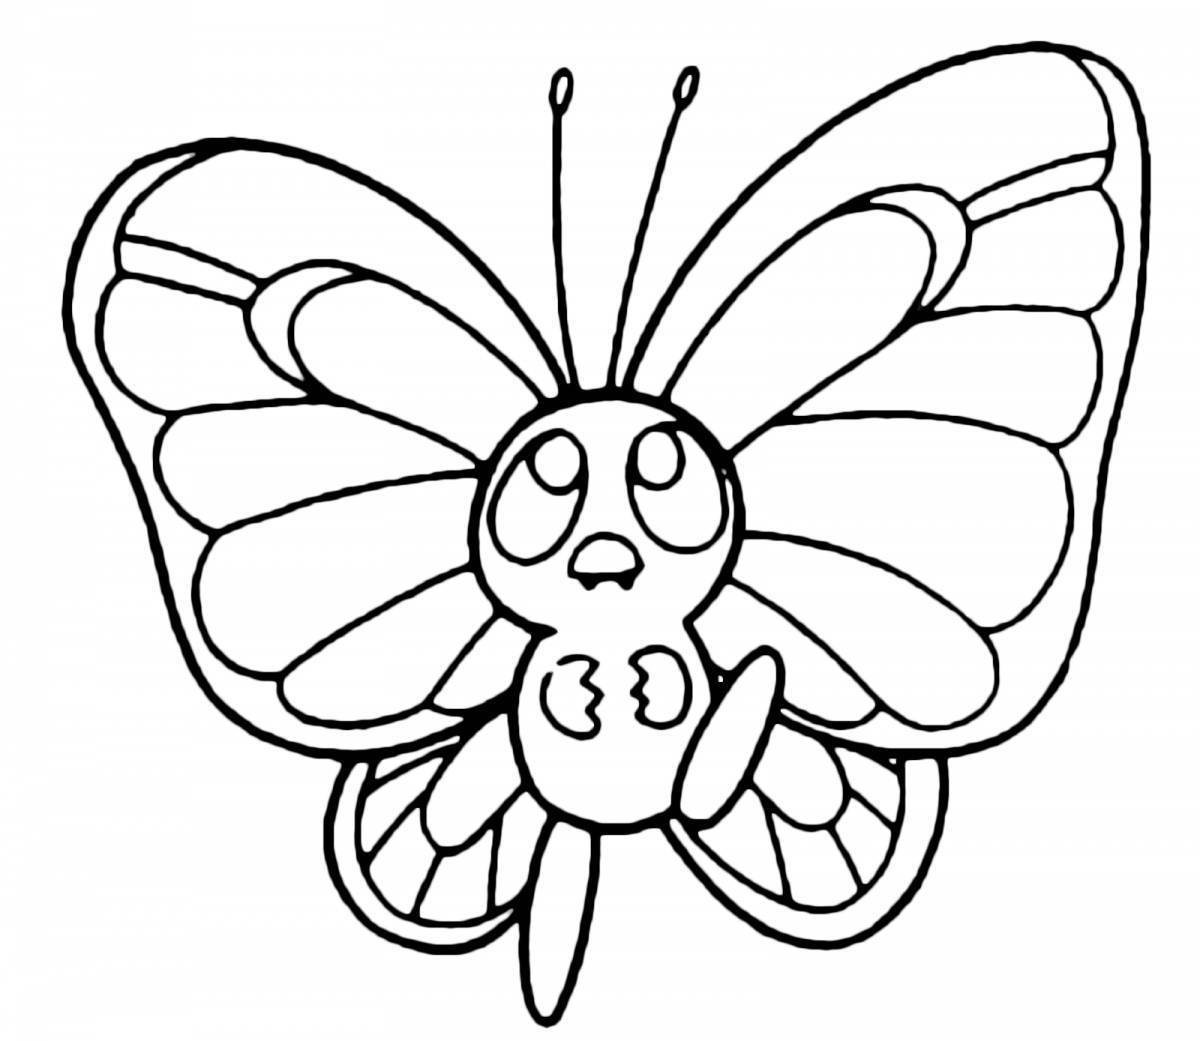 Раскраска 2 бабочки. Бабочка раскраска для детей. Бабочка раскраска для малышей. Детские раскраски бабочки. Раскраски для детей 5 лет бабочки.